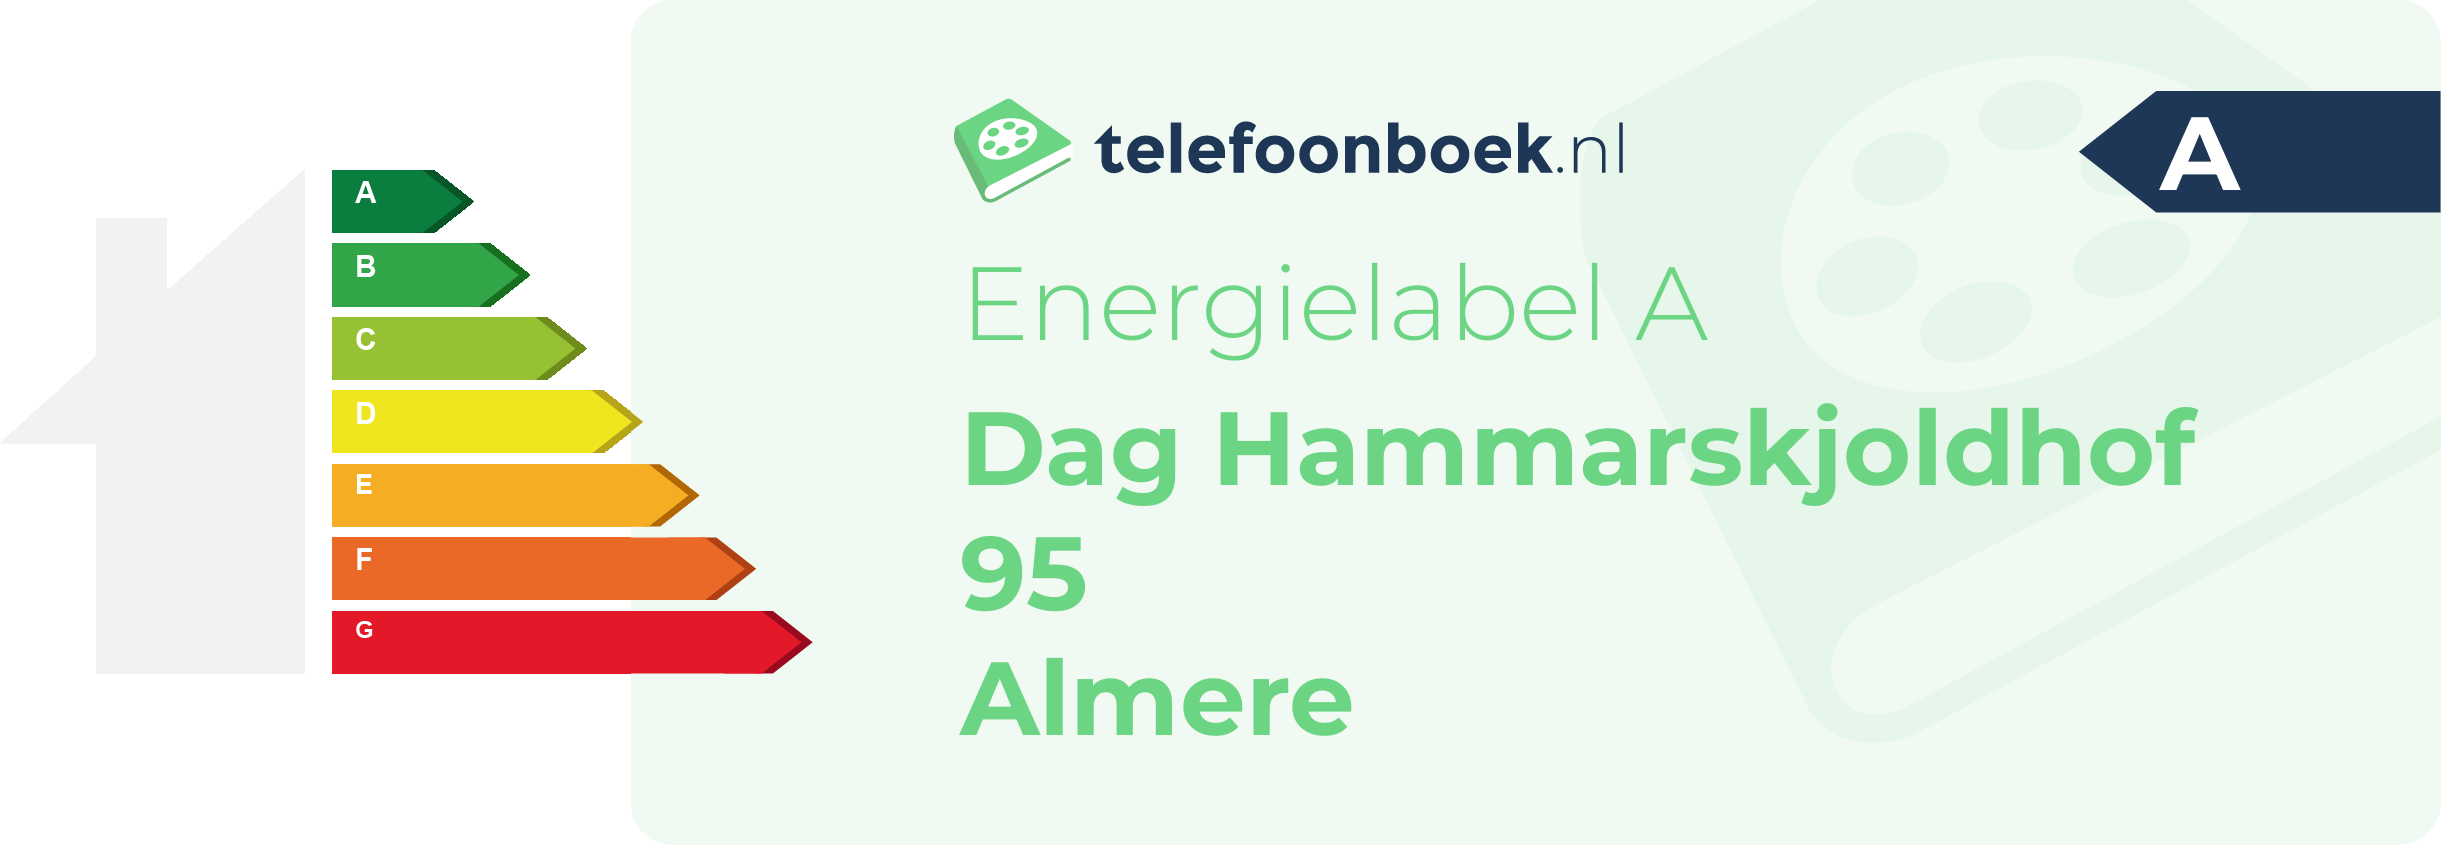 Energielabel Dag Hammarskjoldhof 95 Almere